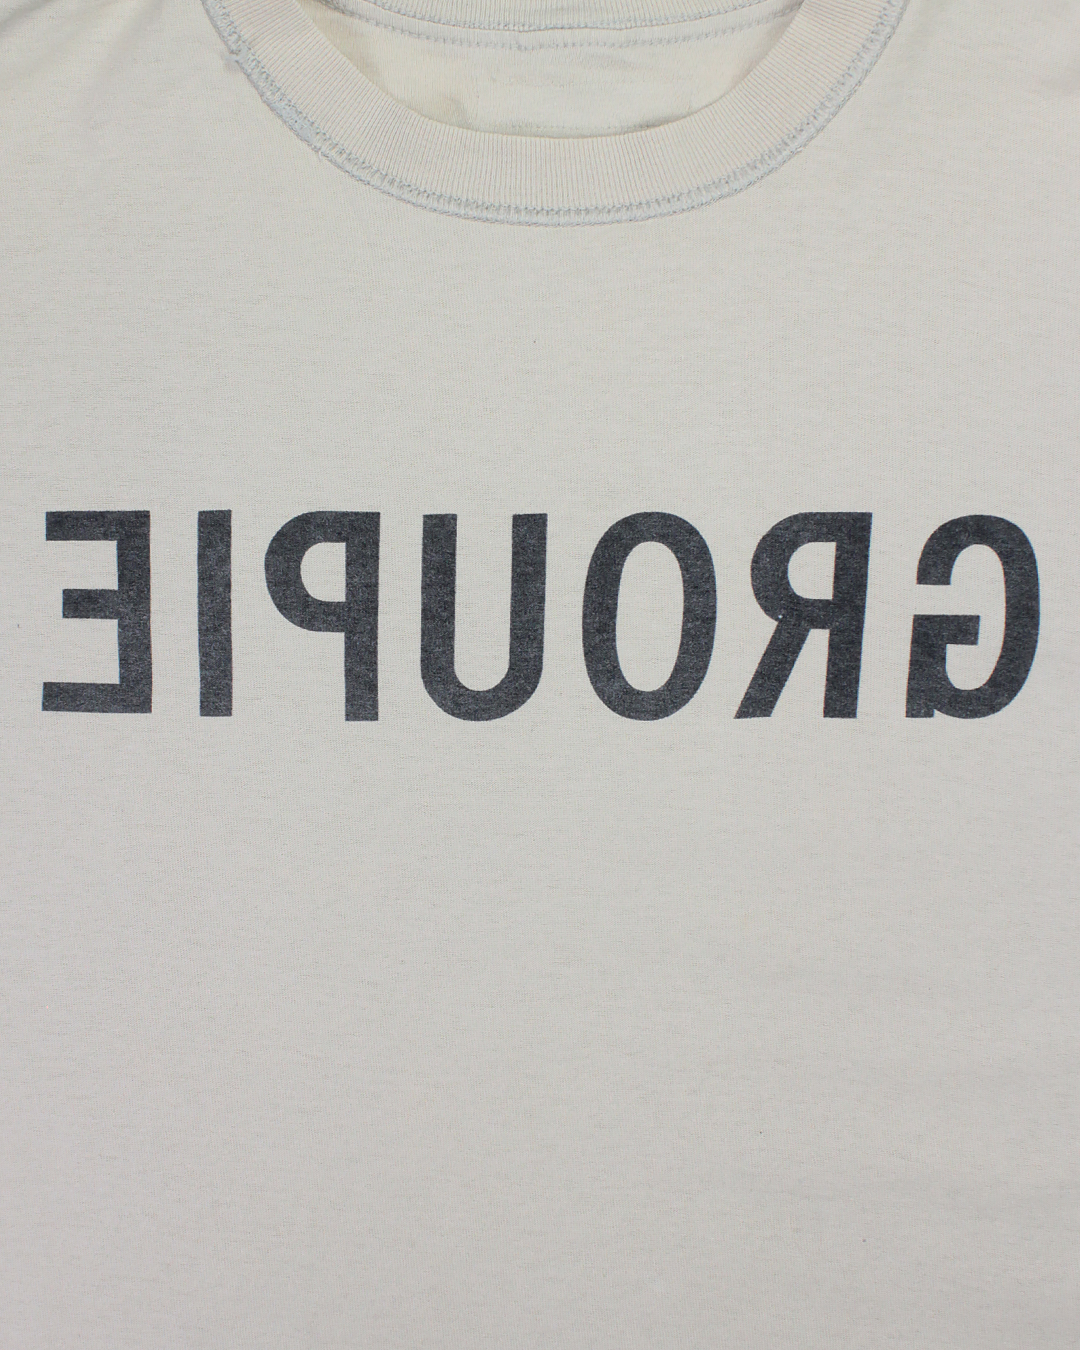 UNDAKOVRIST „Groupie” T-shirt